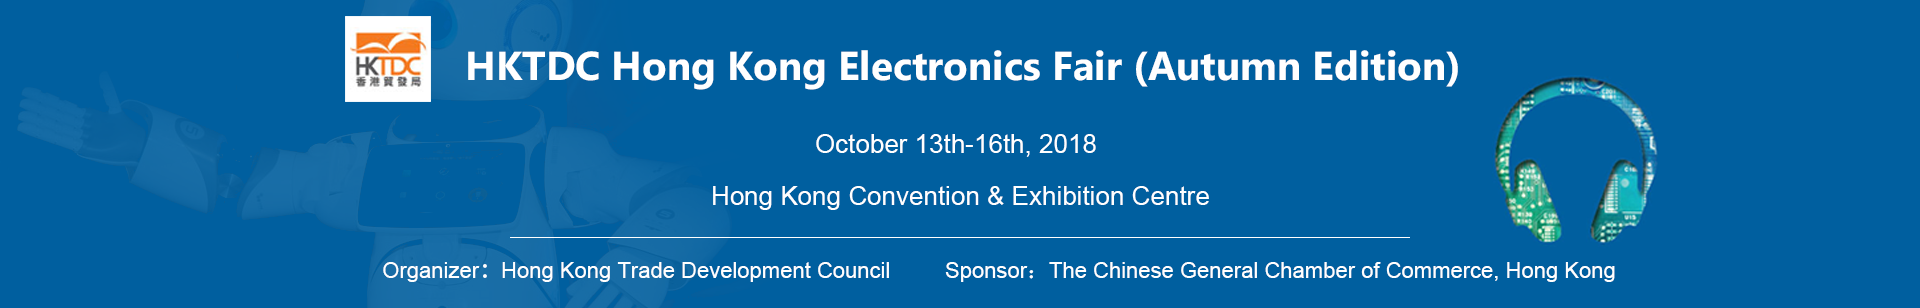 HKTDC Hong Kong Electronics Fair (Autumn Edition)